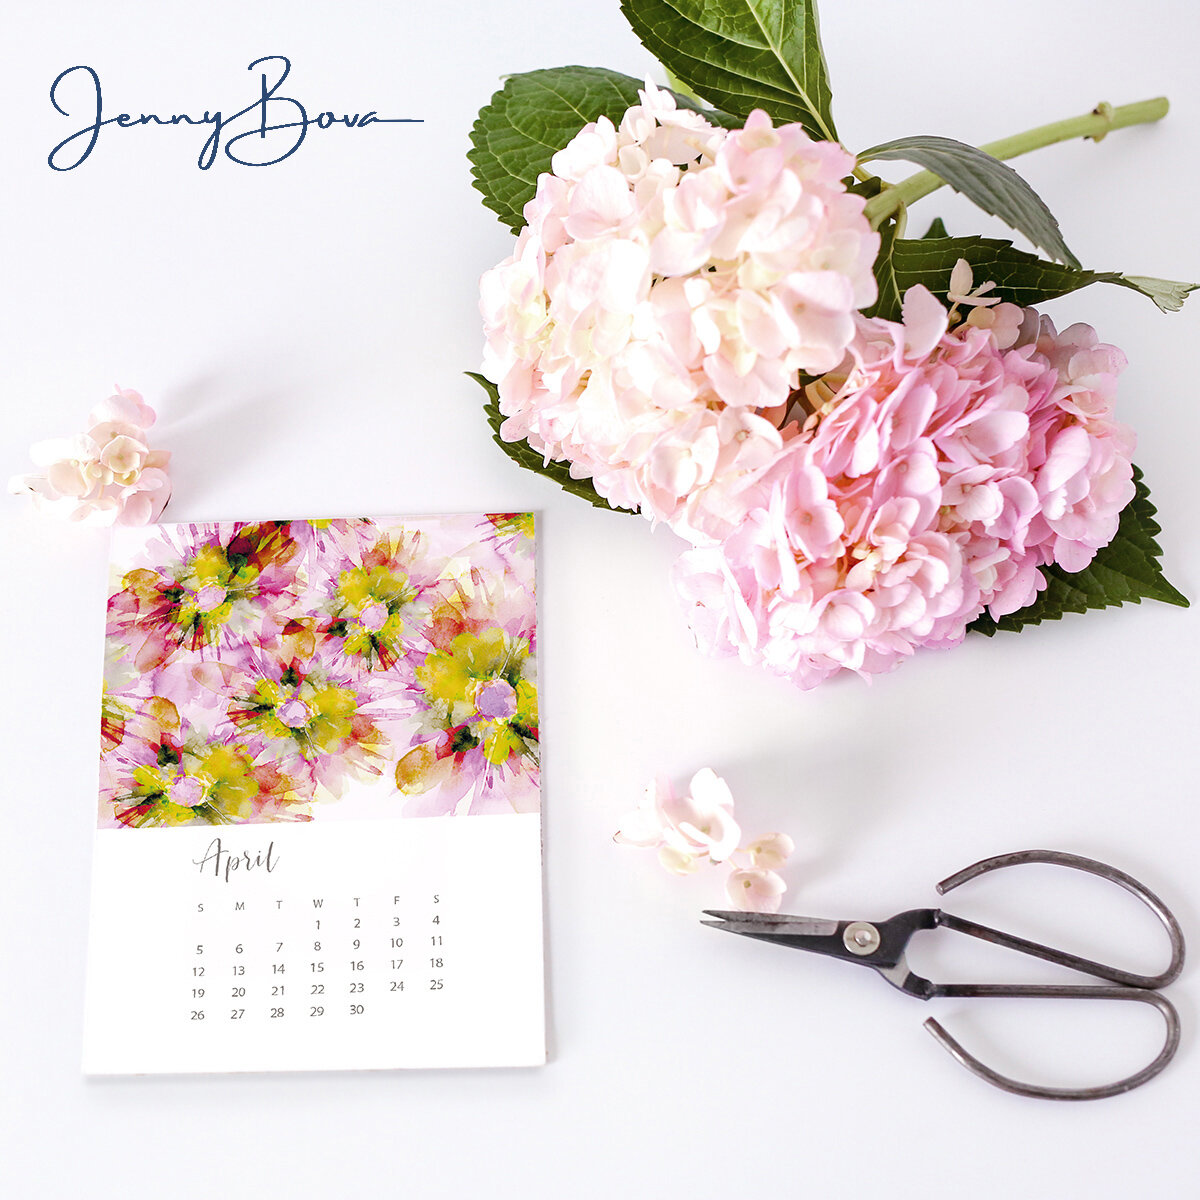 Jenny Bova calendar April hydrangea shot branded.jpg